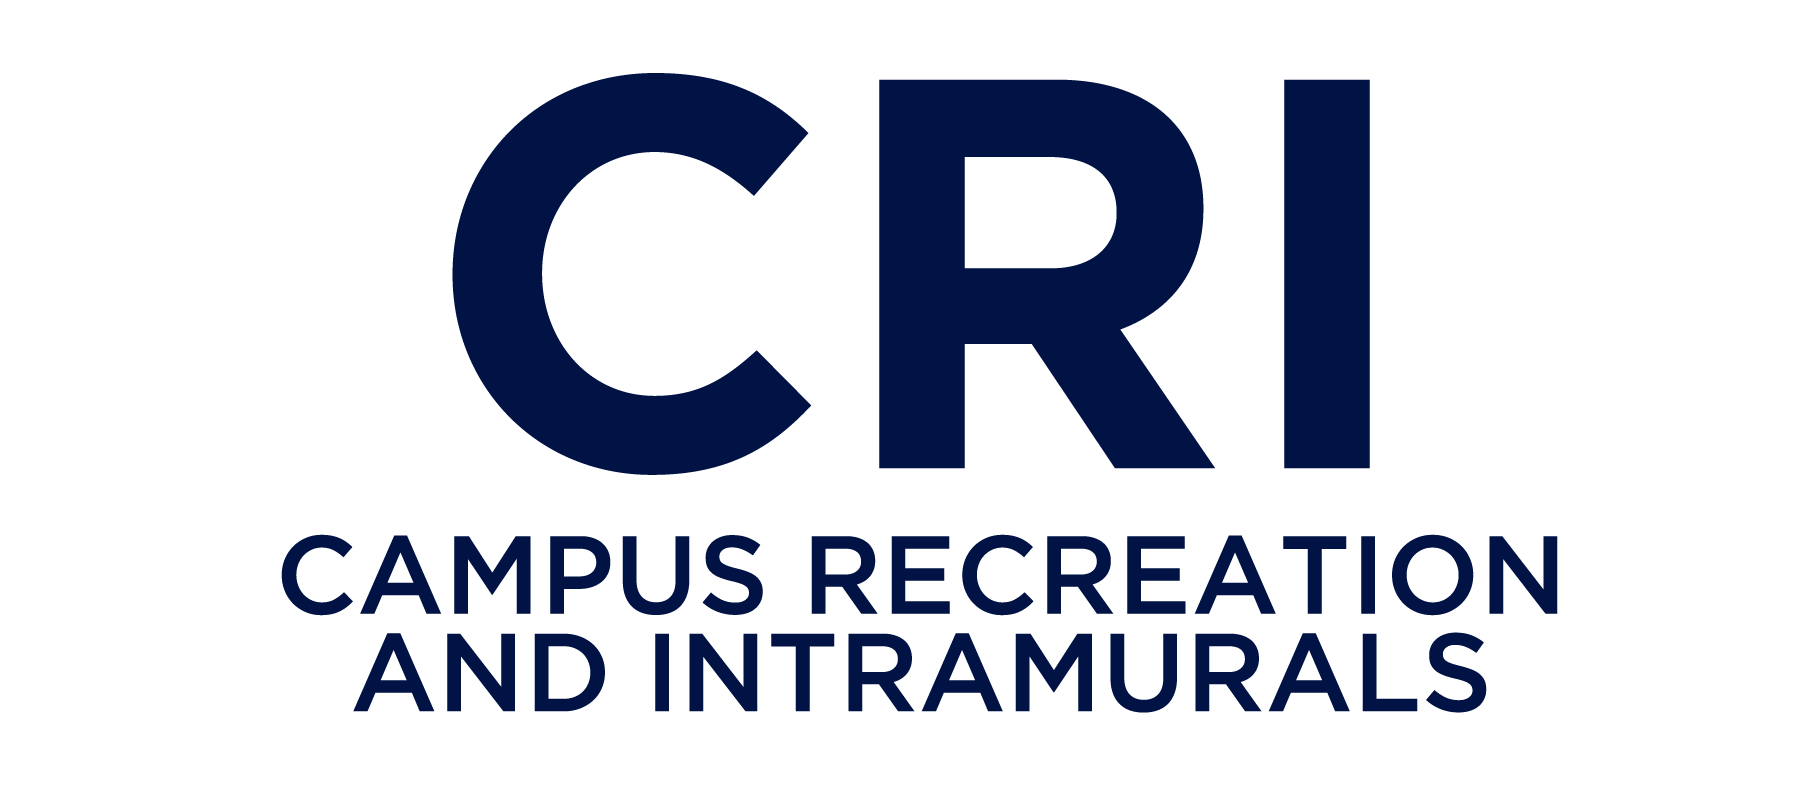 Campus Recreation and Intramurals